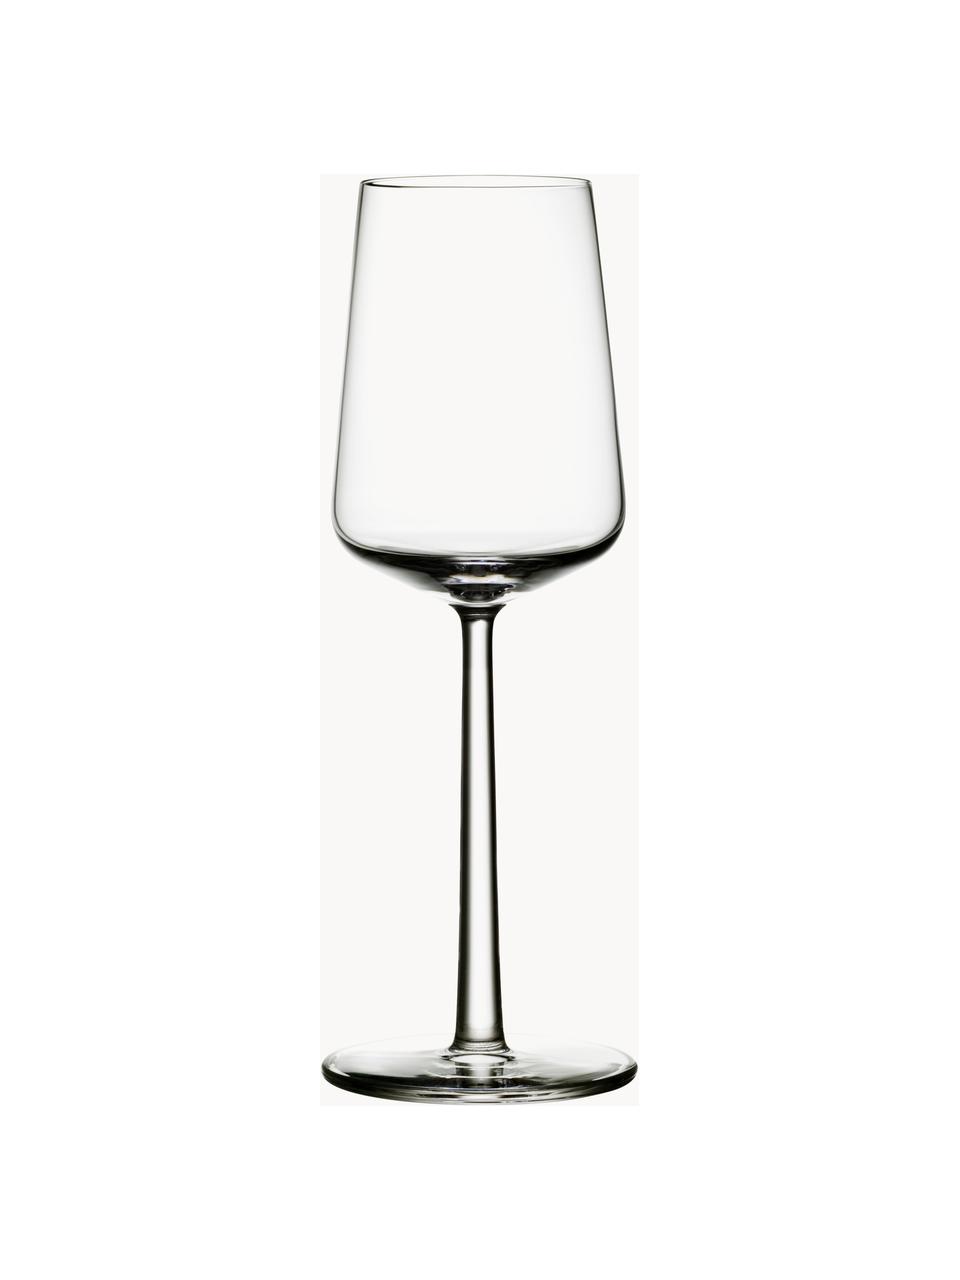 Bicchieri da vino bianco Essence 2 pz, Vetro, Trasparente, Ø 6 x Alt. 23 cm, 330 ml